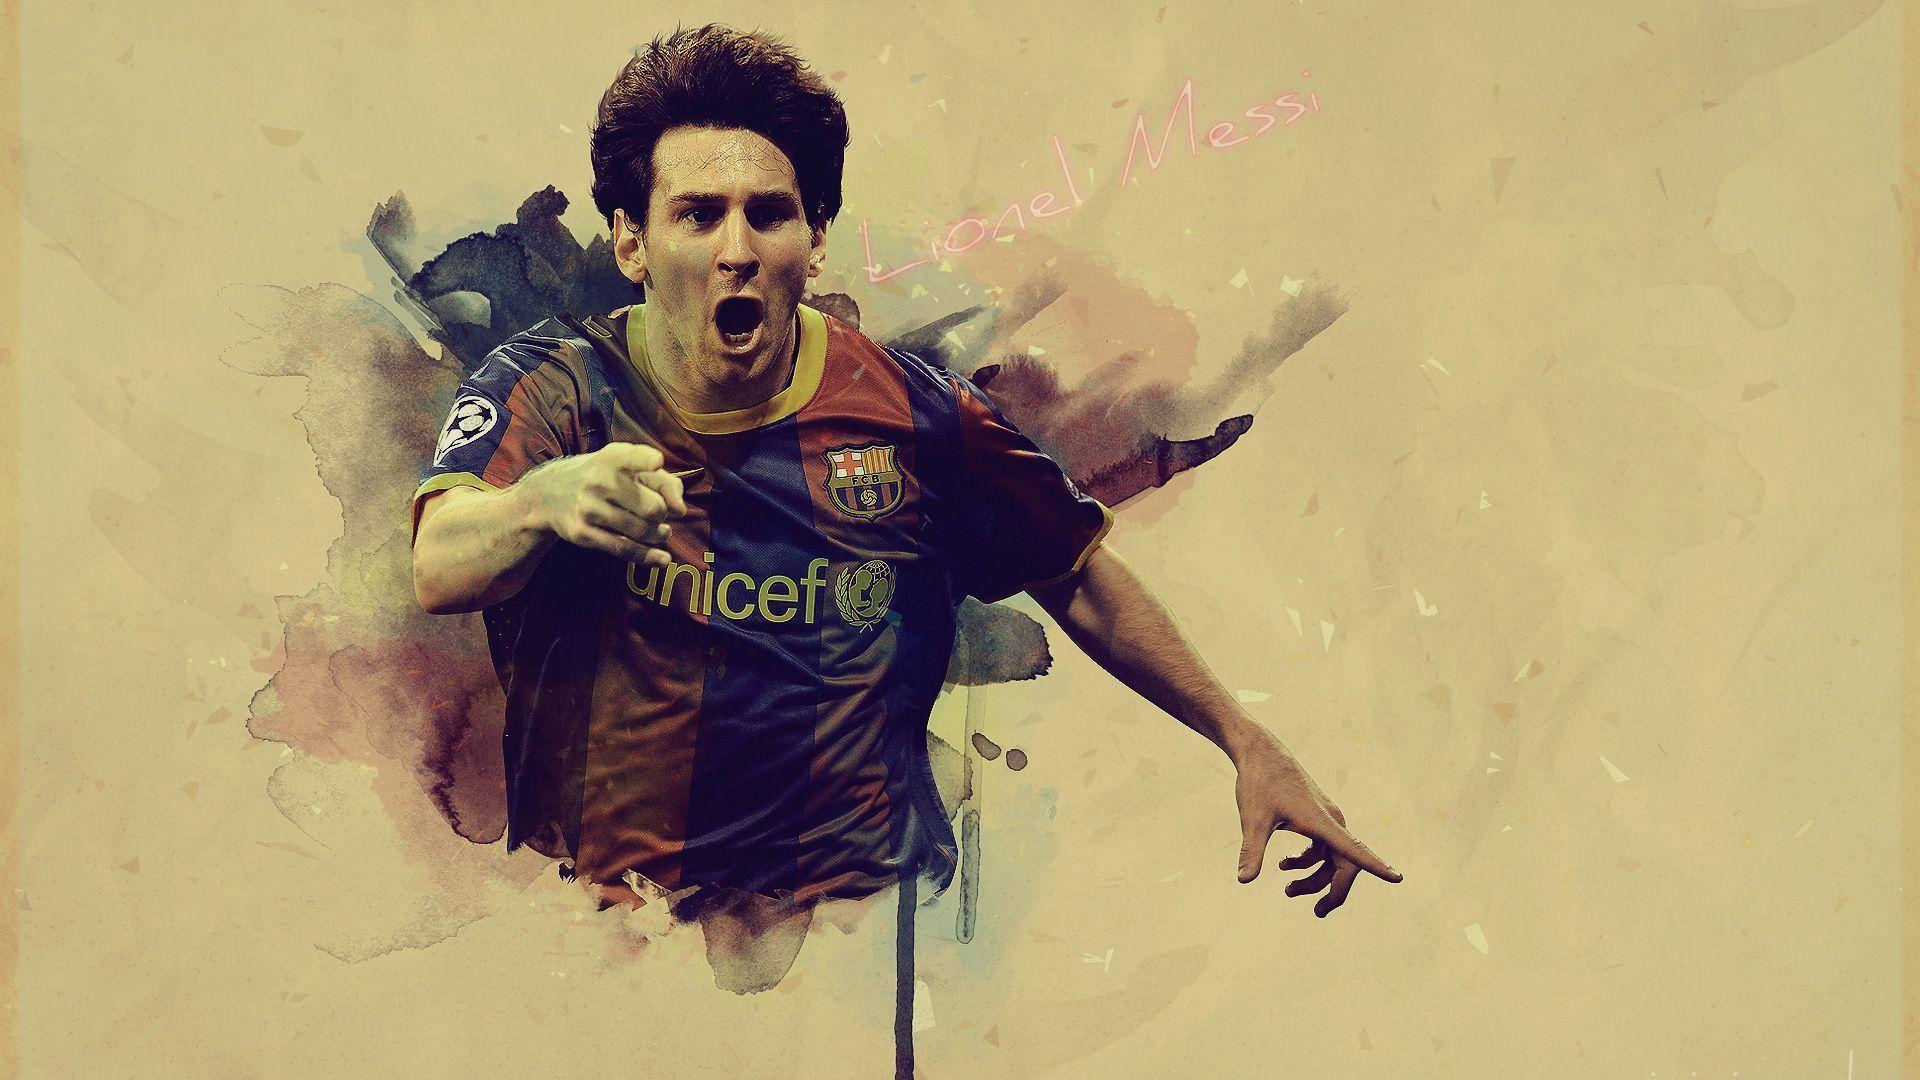 Messi Address Barcelona Background 1 HD Wallpaper. F. C. Barcelona